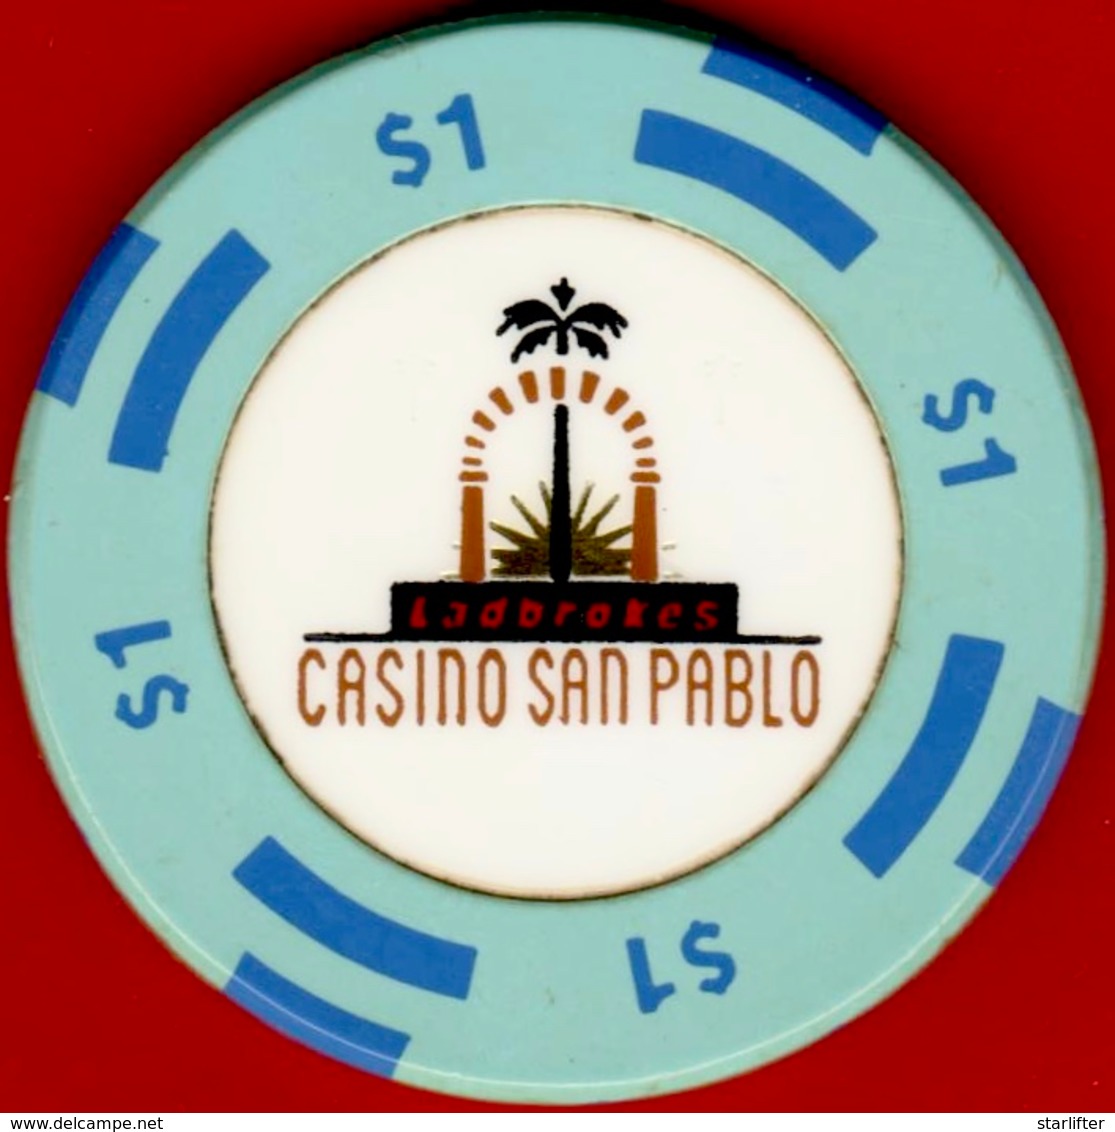 $1 Casino Chip. San Pablo Casino, San Pablo, CA. I03. - Casino